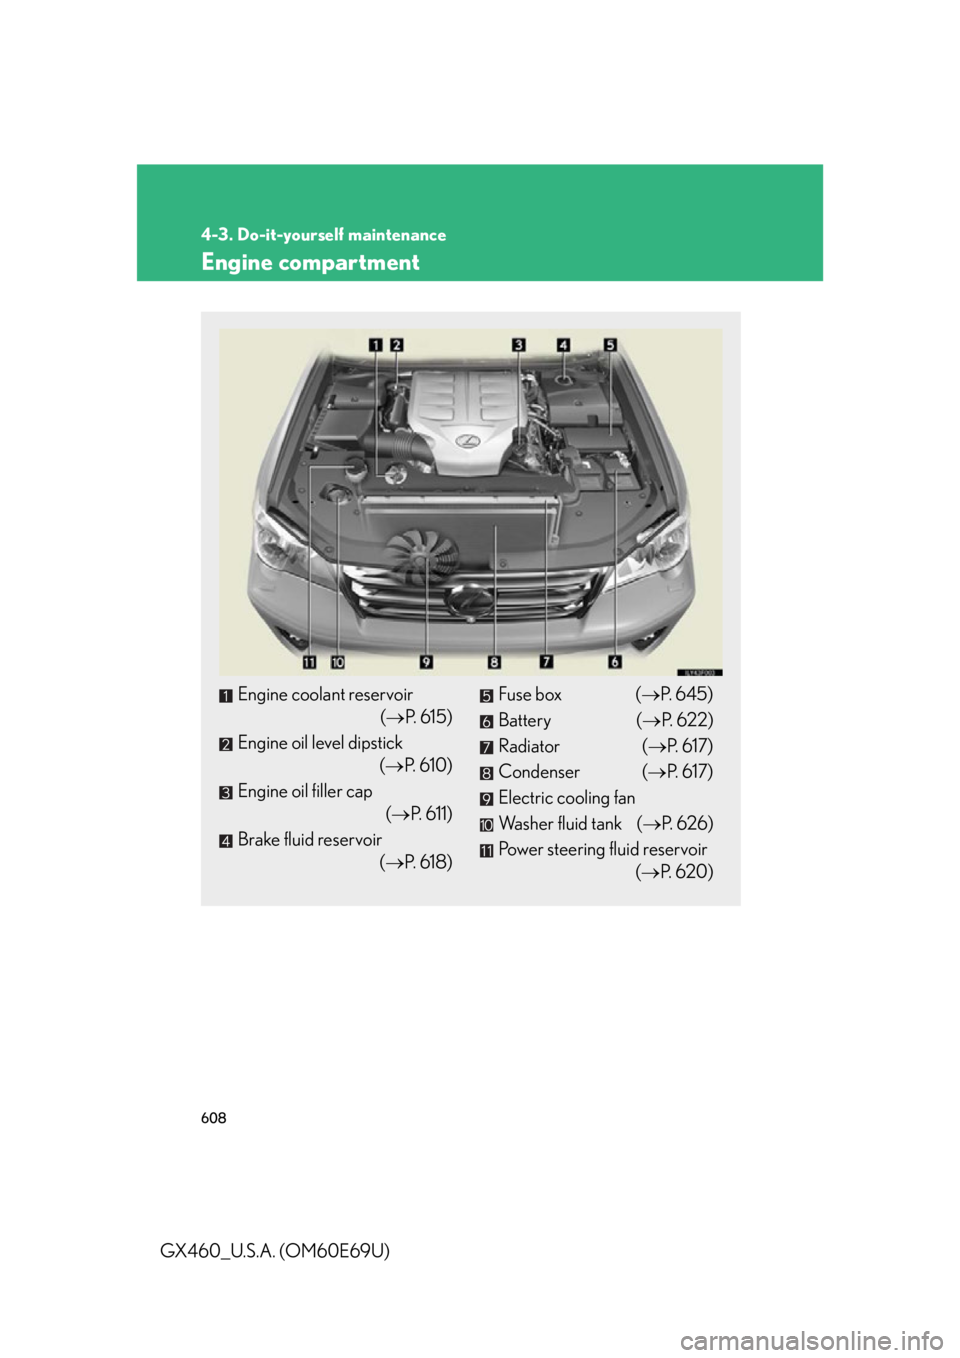 Lexus GX460 2010  Using The Bluetooth Audio System / 608
4-3. Do-it-yourself maintenance
GX460_U.S.A. (OM60E69U)
Engine compartment
Engine coolant reservoir
( P. 615)
Engine oil level dipstick 
( P. 610)
Engine oil filler cap 
( P. 611